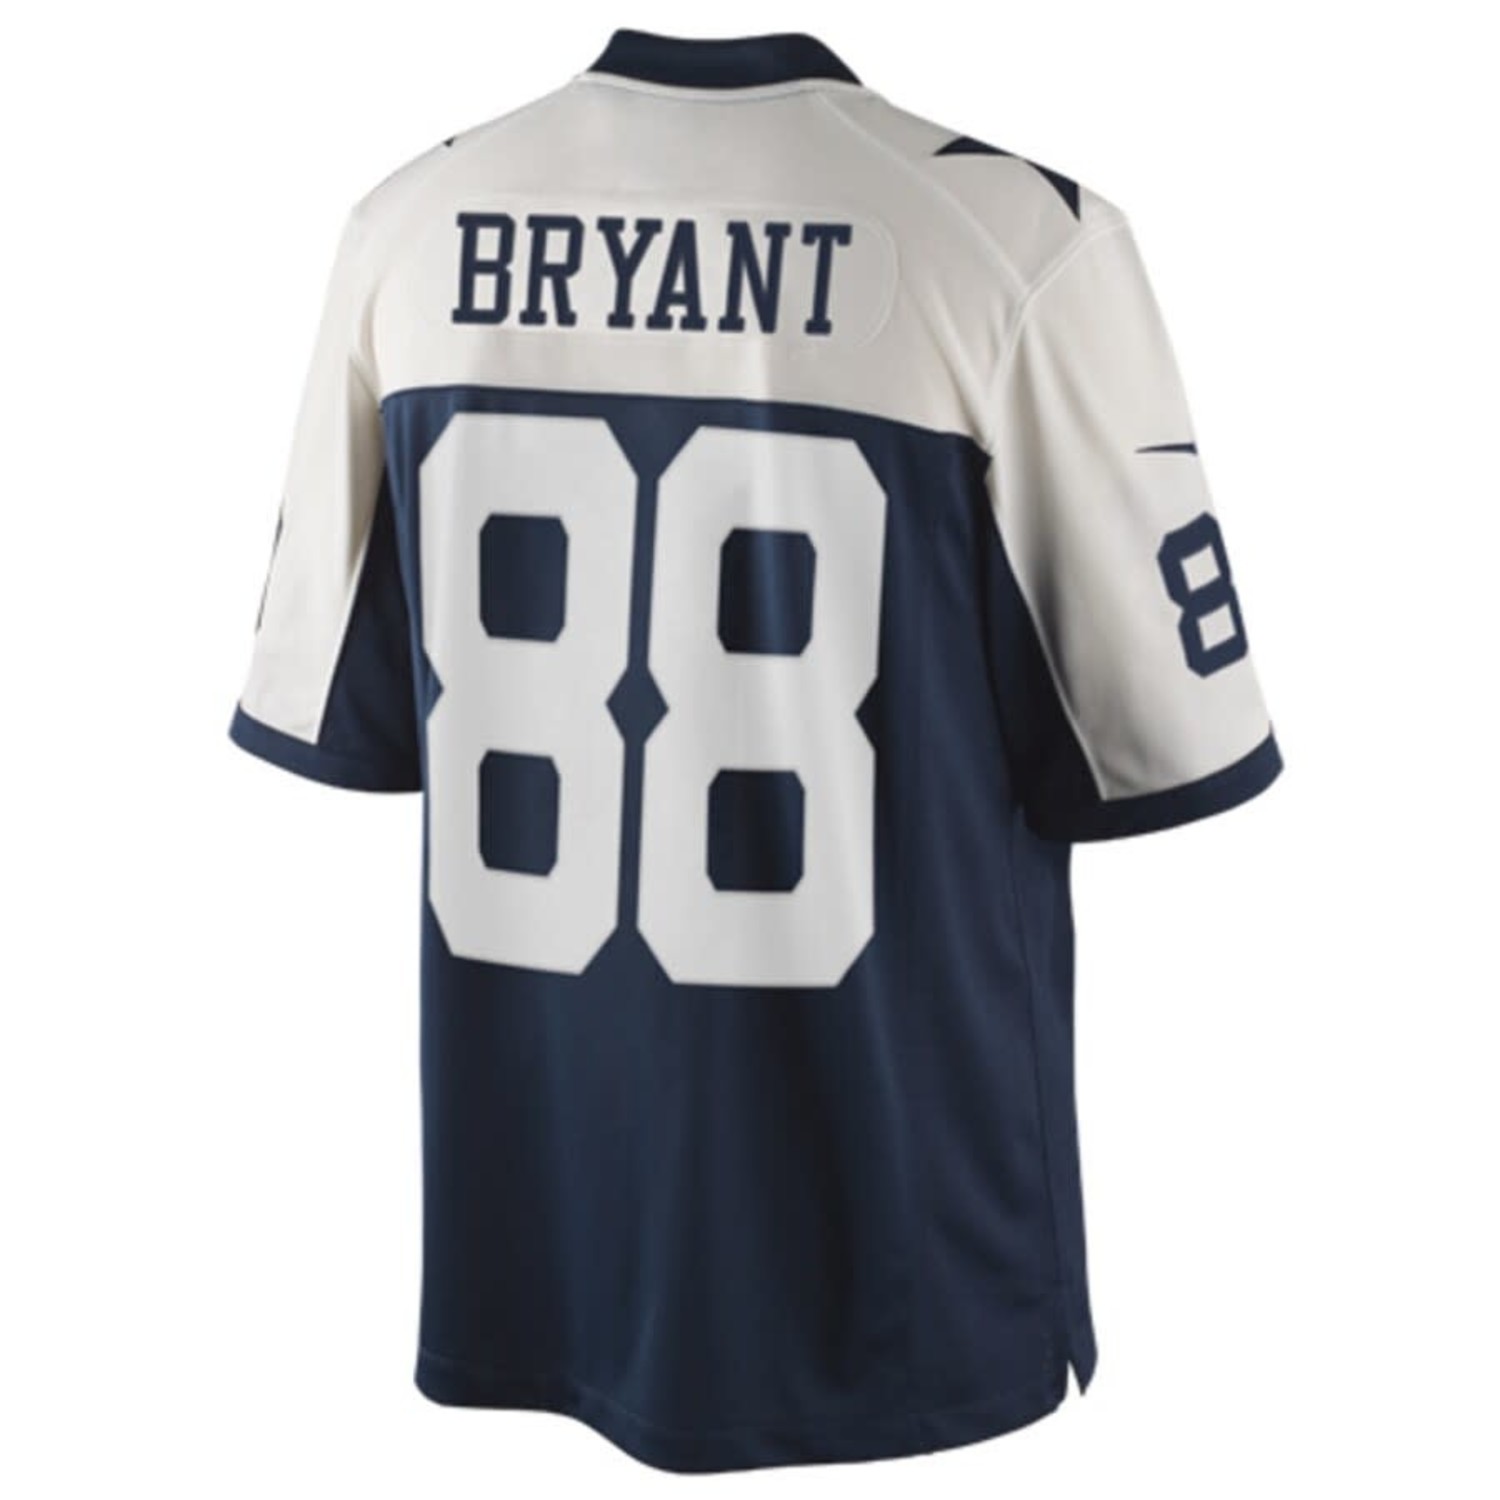 Dez Bryant Autographed Dallas Cowboys #88 Nike Limited Framed